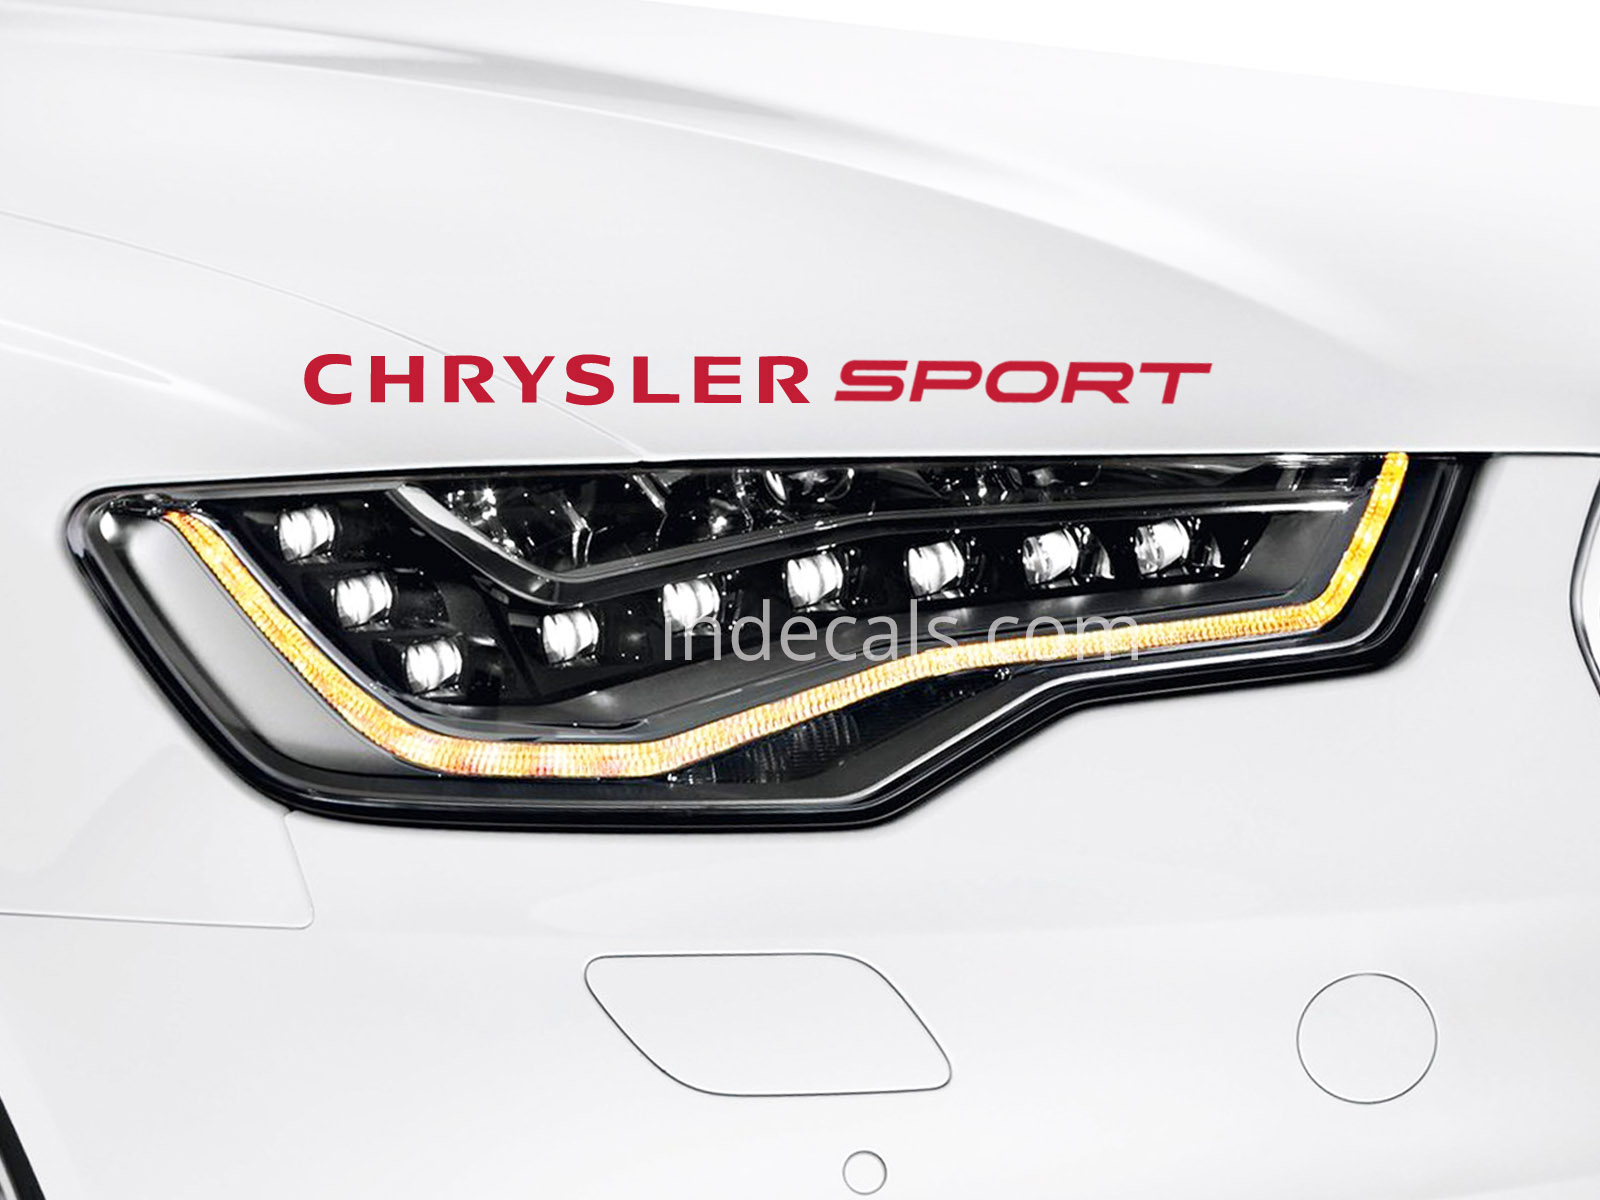 1 x Chrysler Sport Sticker - Red